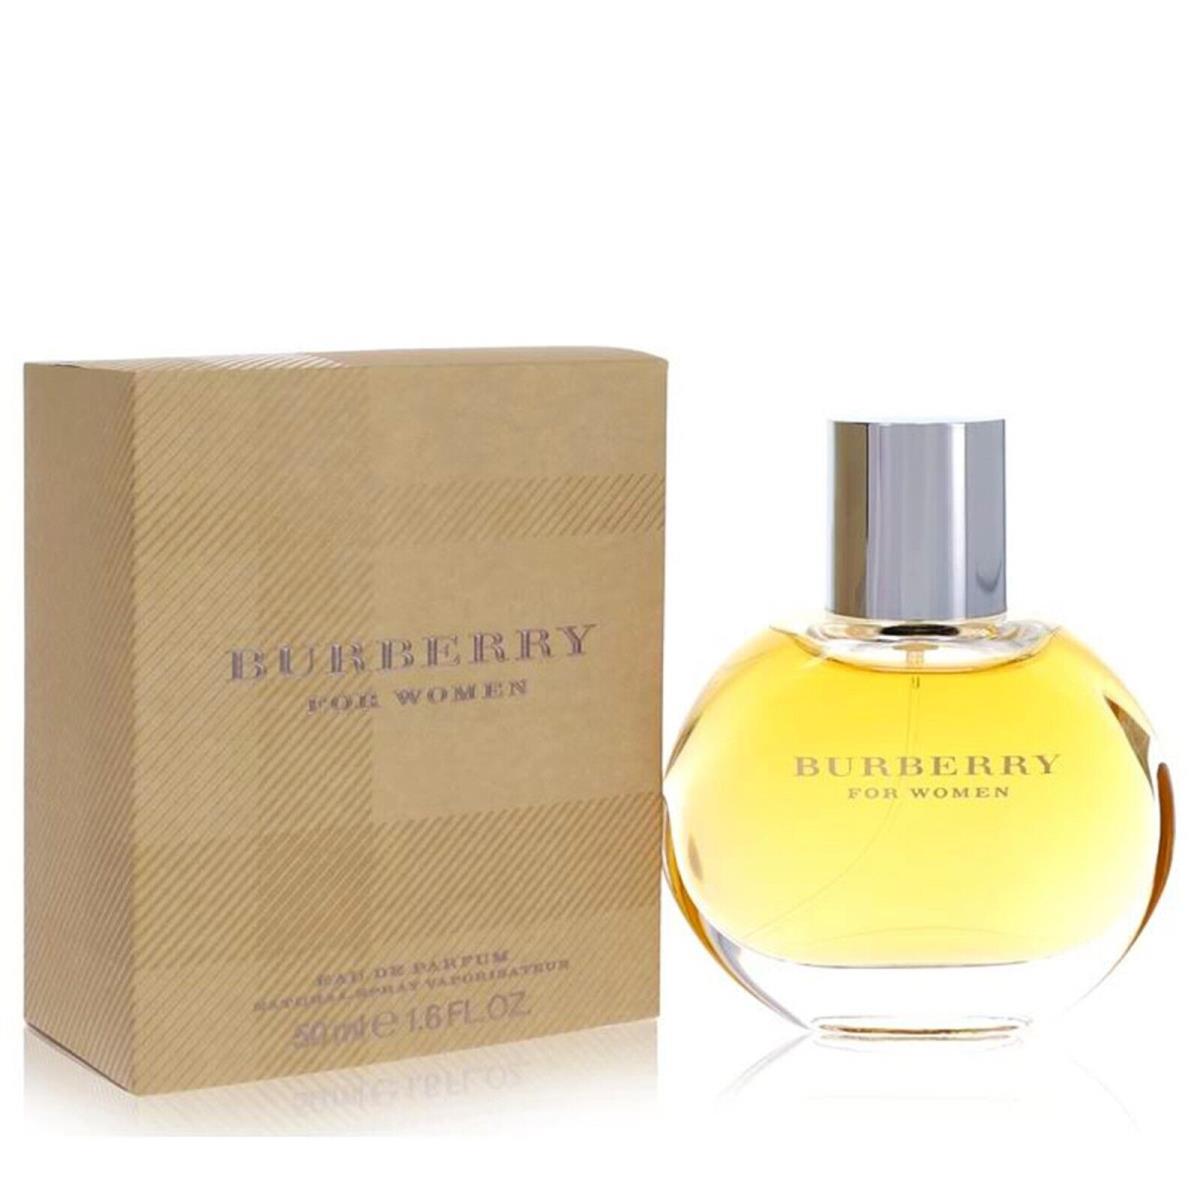 Burberry Perfume by Burberry Women Eau De Parfum Edp Spray 1.7 oz Fragrance